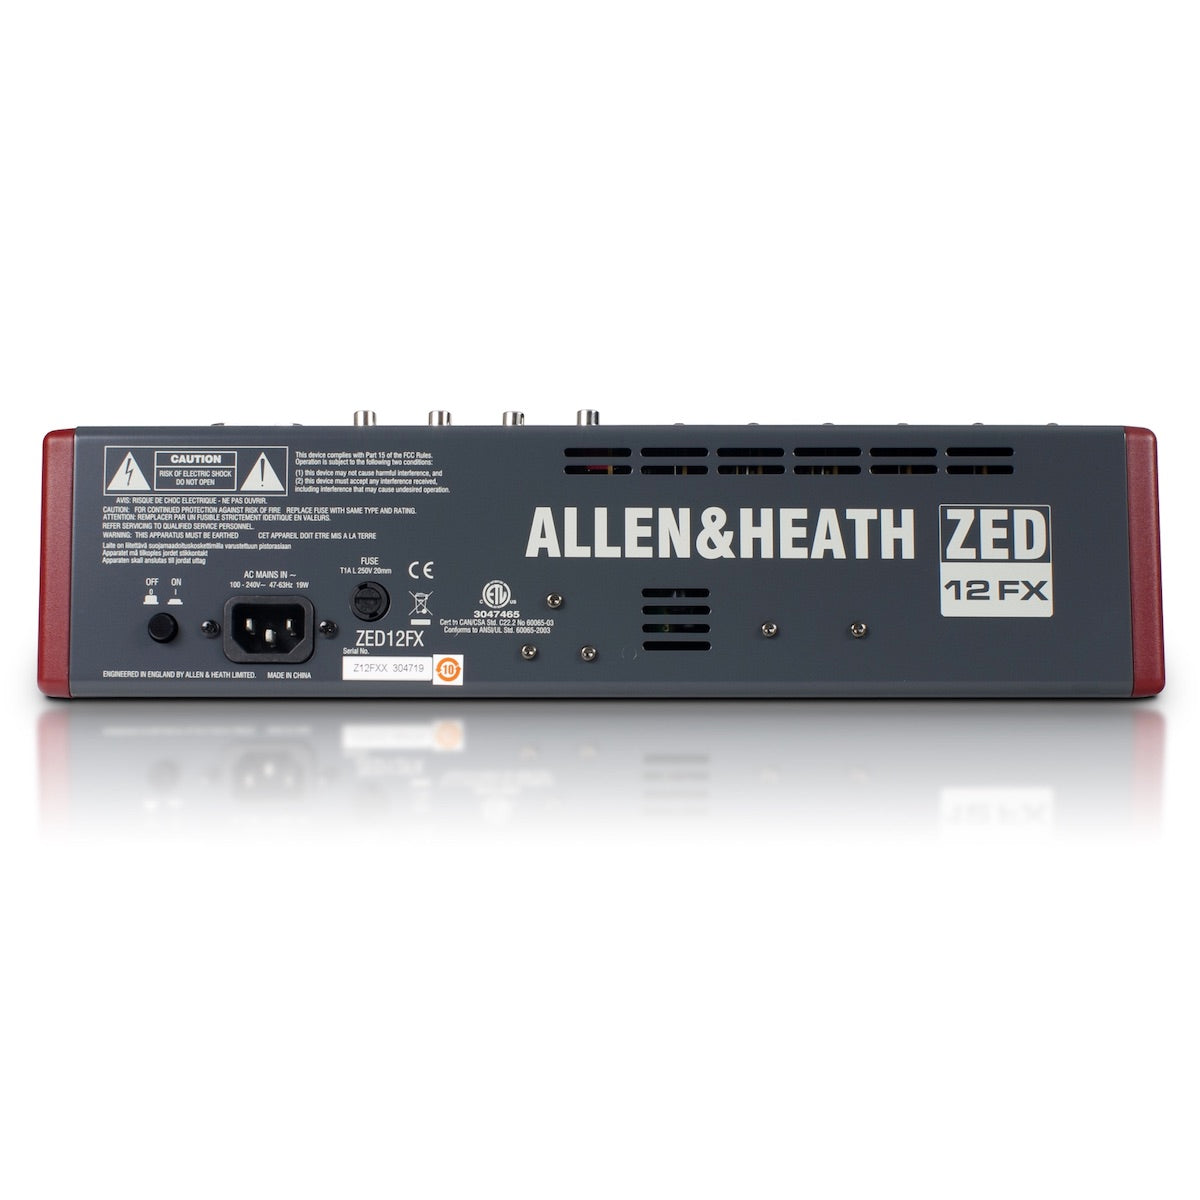 Allen & Heath ZED-12FX 12-Channel Analog USB Mixer with Effects